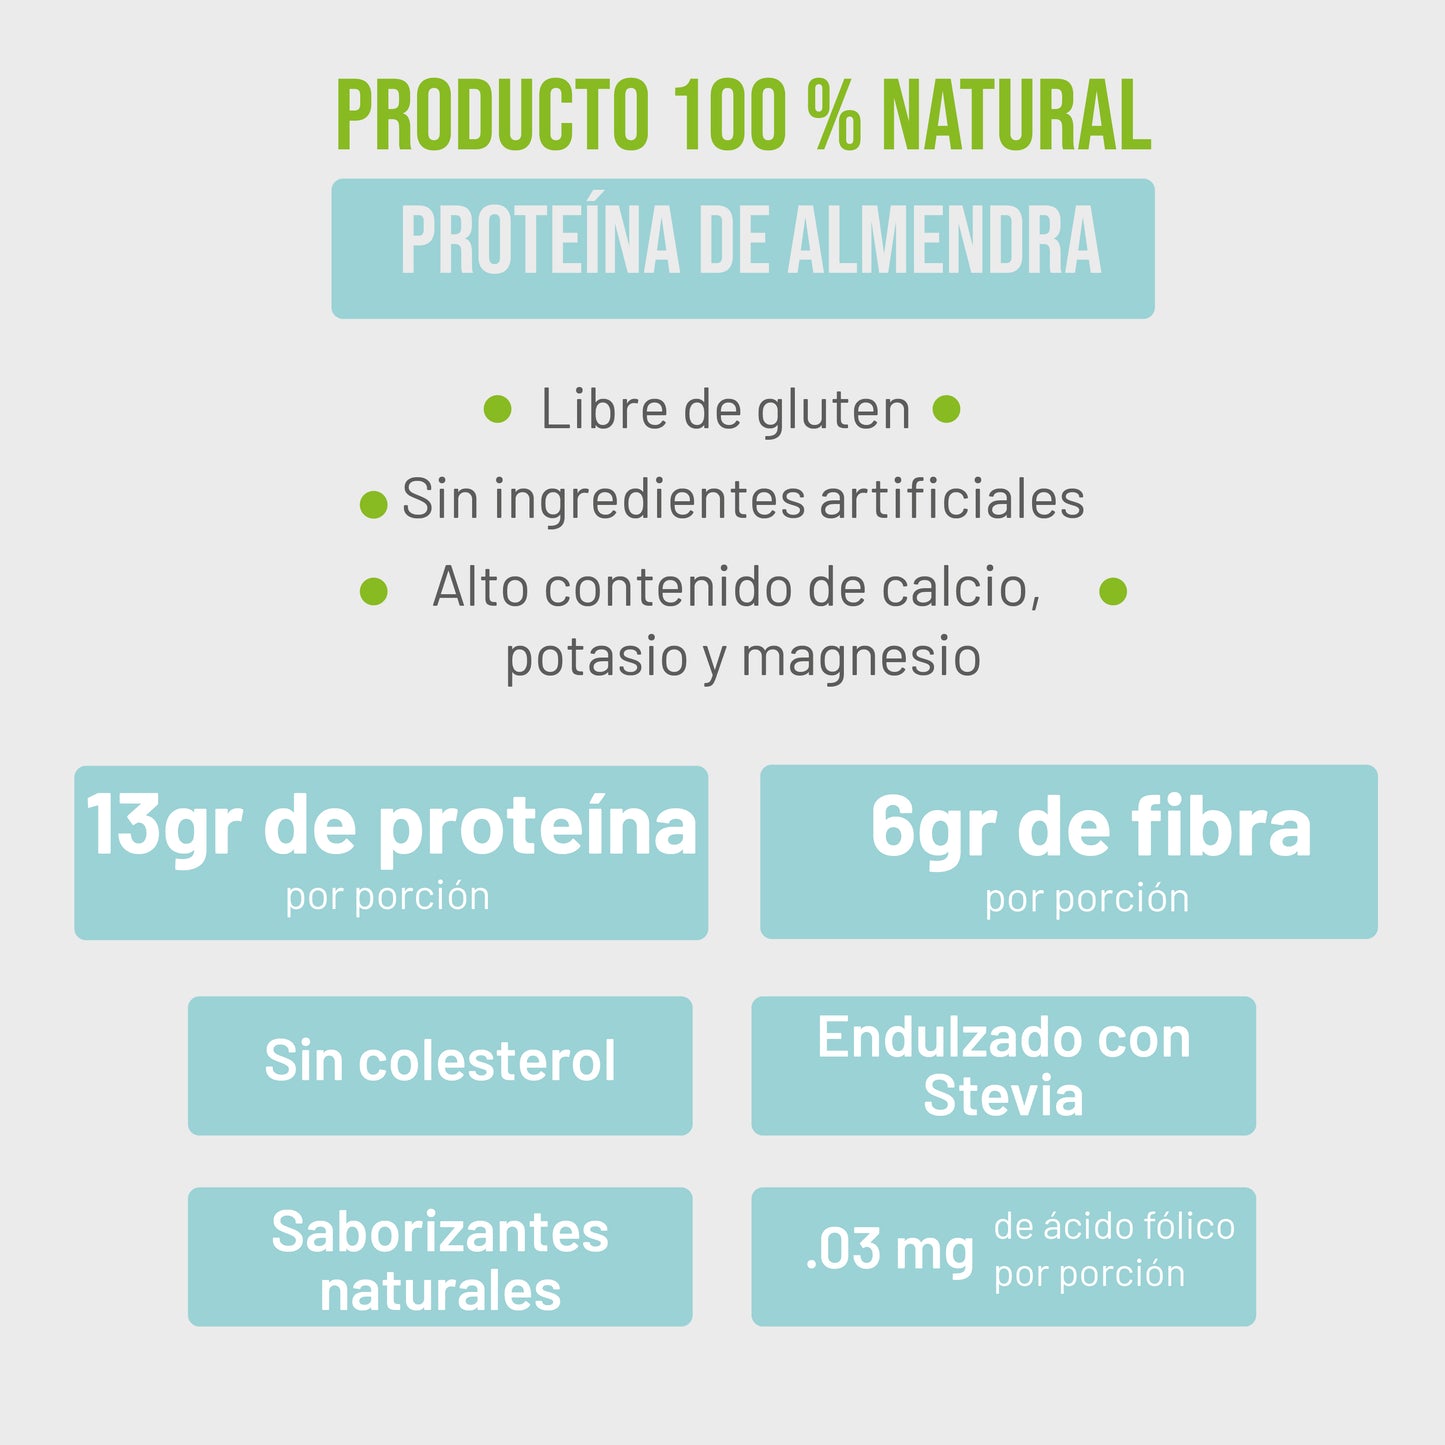 ProteÃ­na Vegana Almendra Ivo: NutriciÃ³n saludable, sabor inigualable, libre de gluten. 